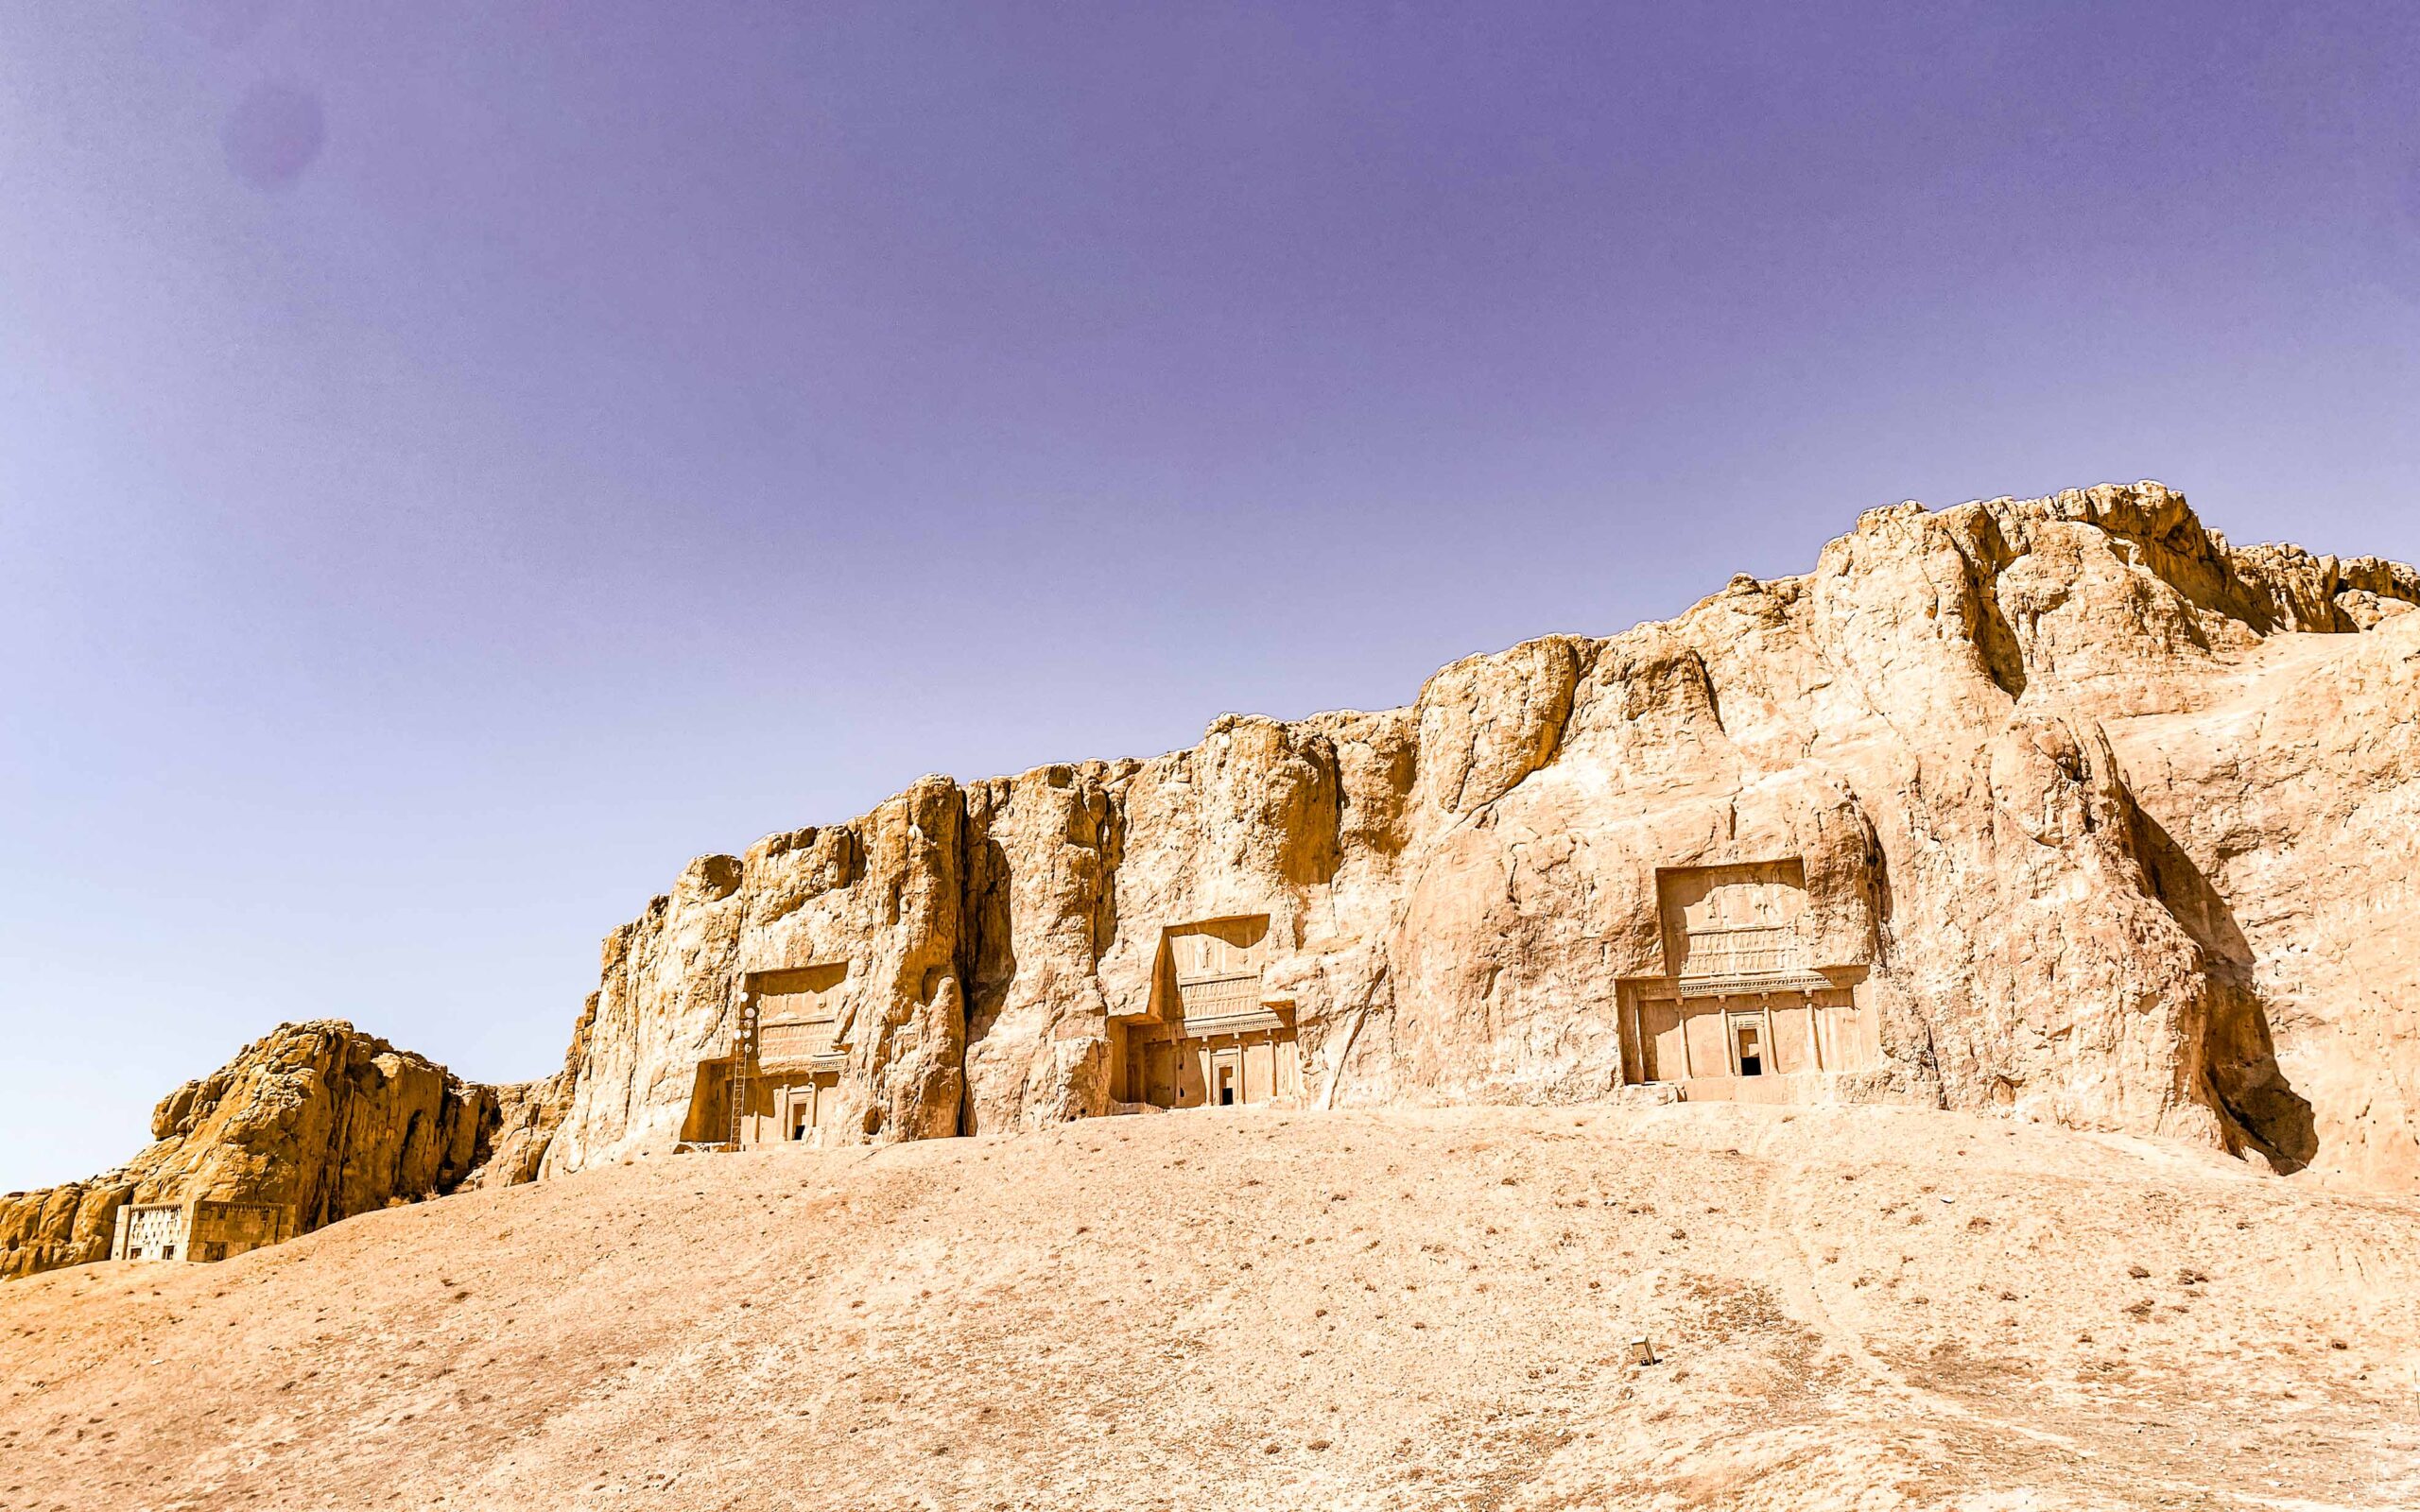 Iran - The rock tombs of Naqsh-e Rostam